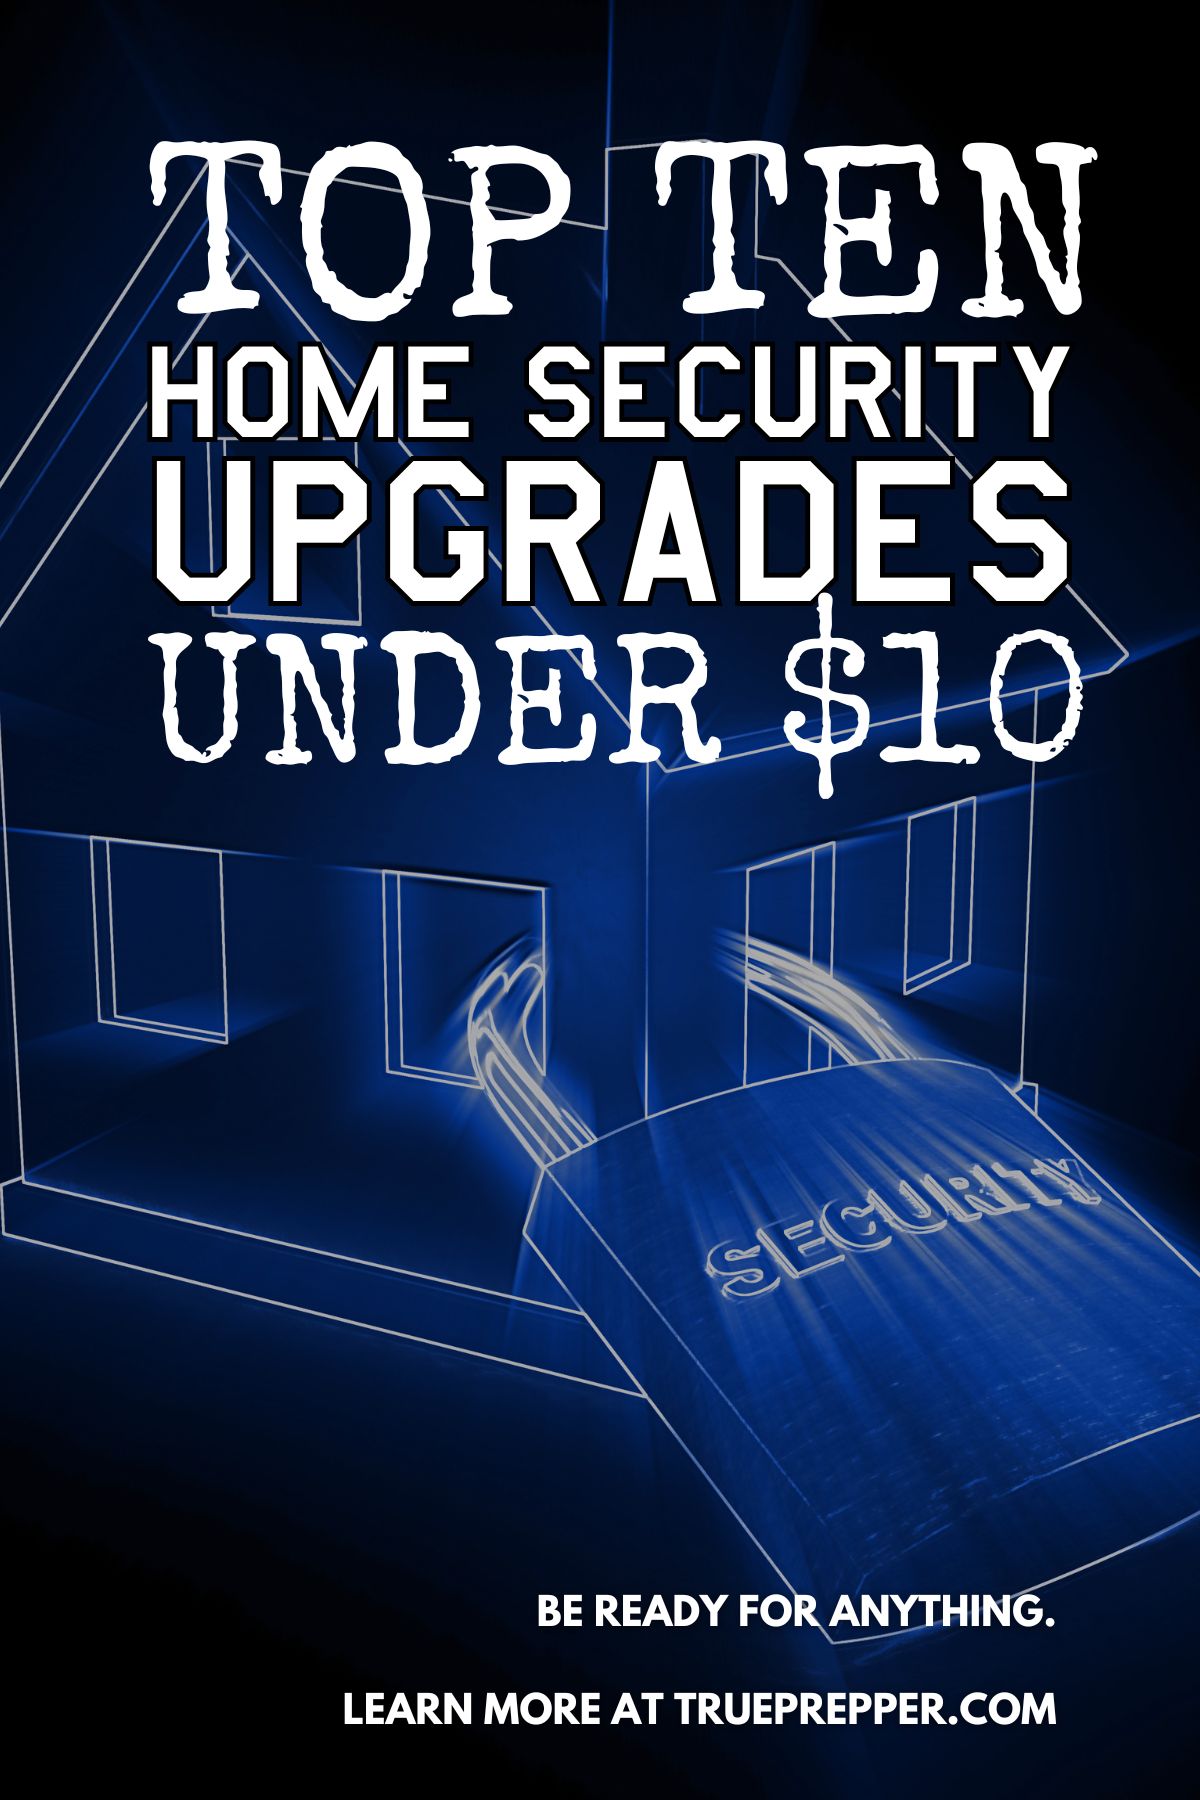 Top 10 Home Security Upgrades Under $10